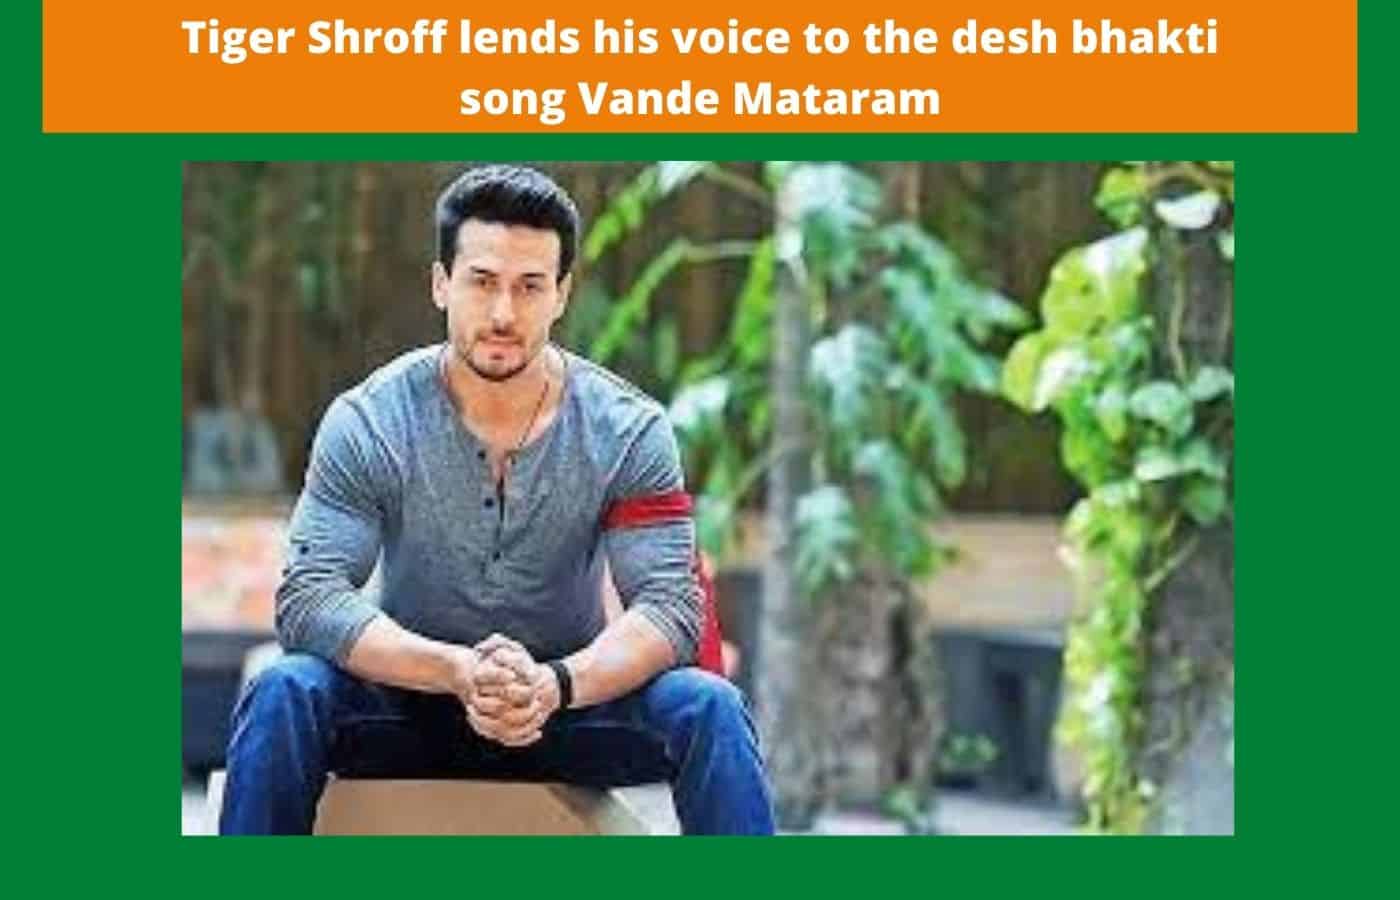 Tiger Shroff lends his voice to the desh bhakti song Vande Mataram